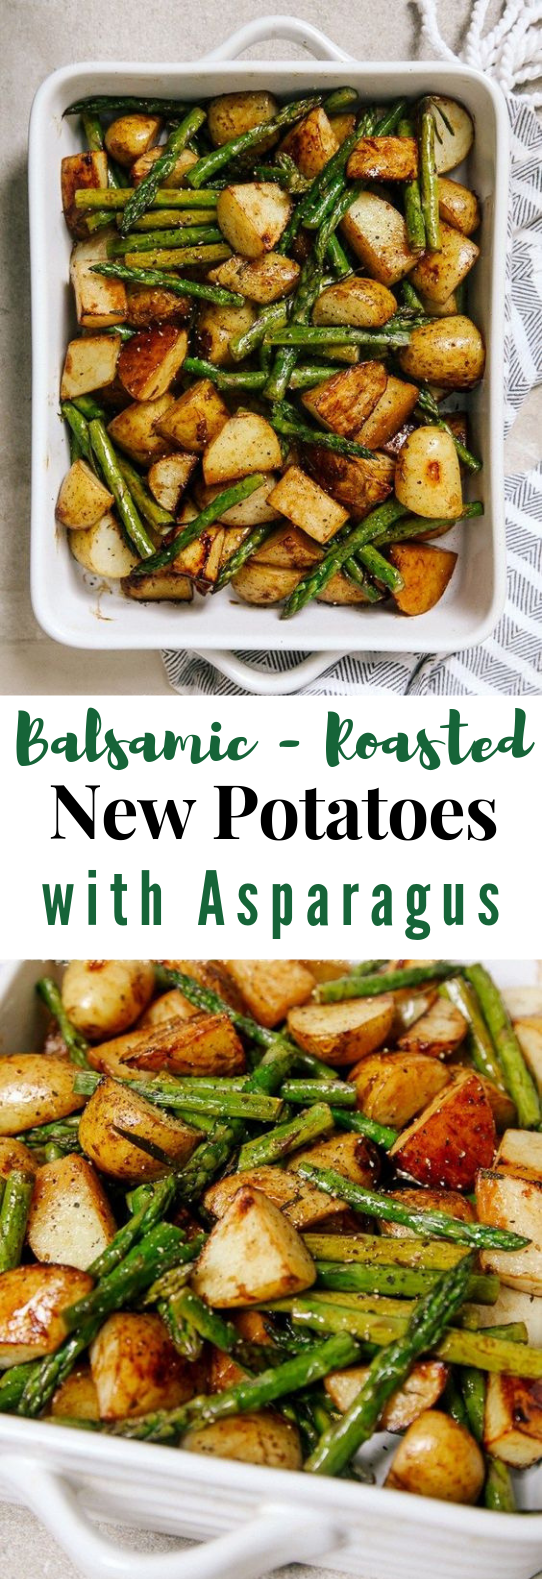 BALSAMIC ROASTED NEW POTATOES WITH ASPARAGUS #Vegetarian #Asparagus